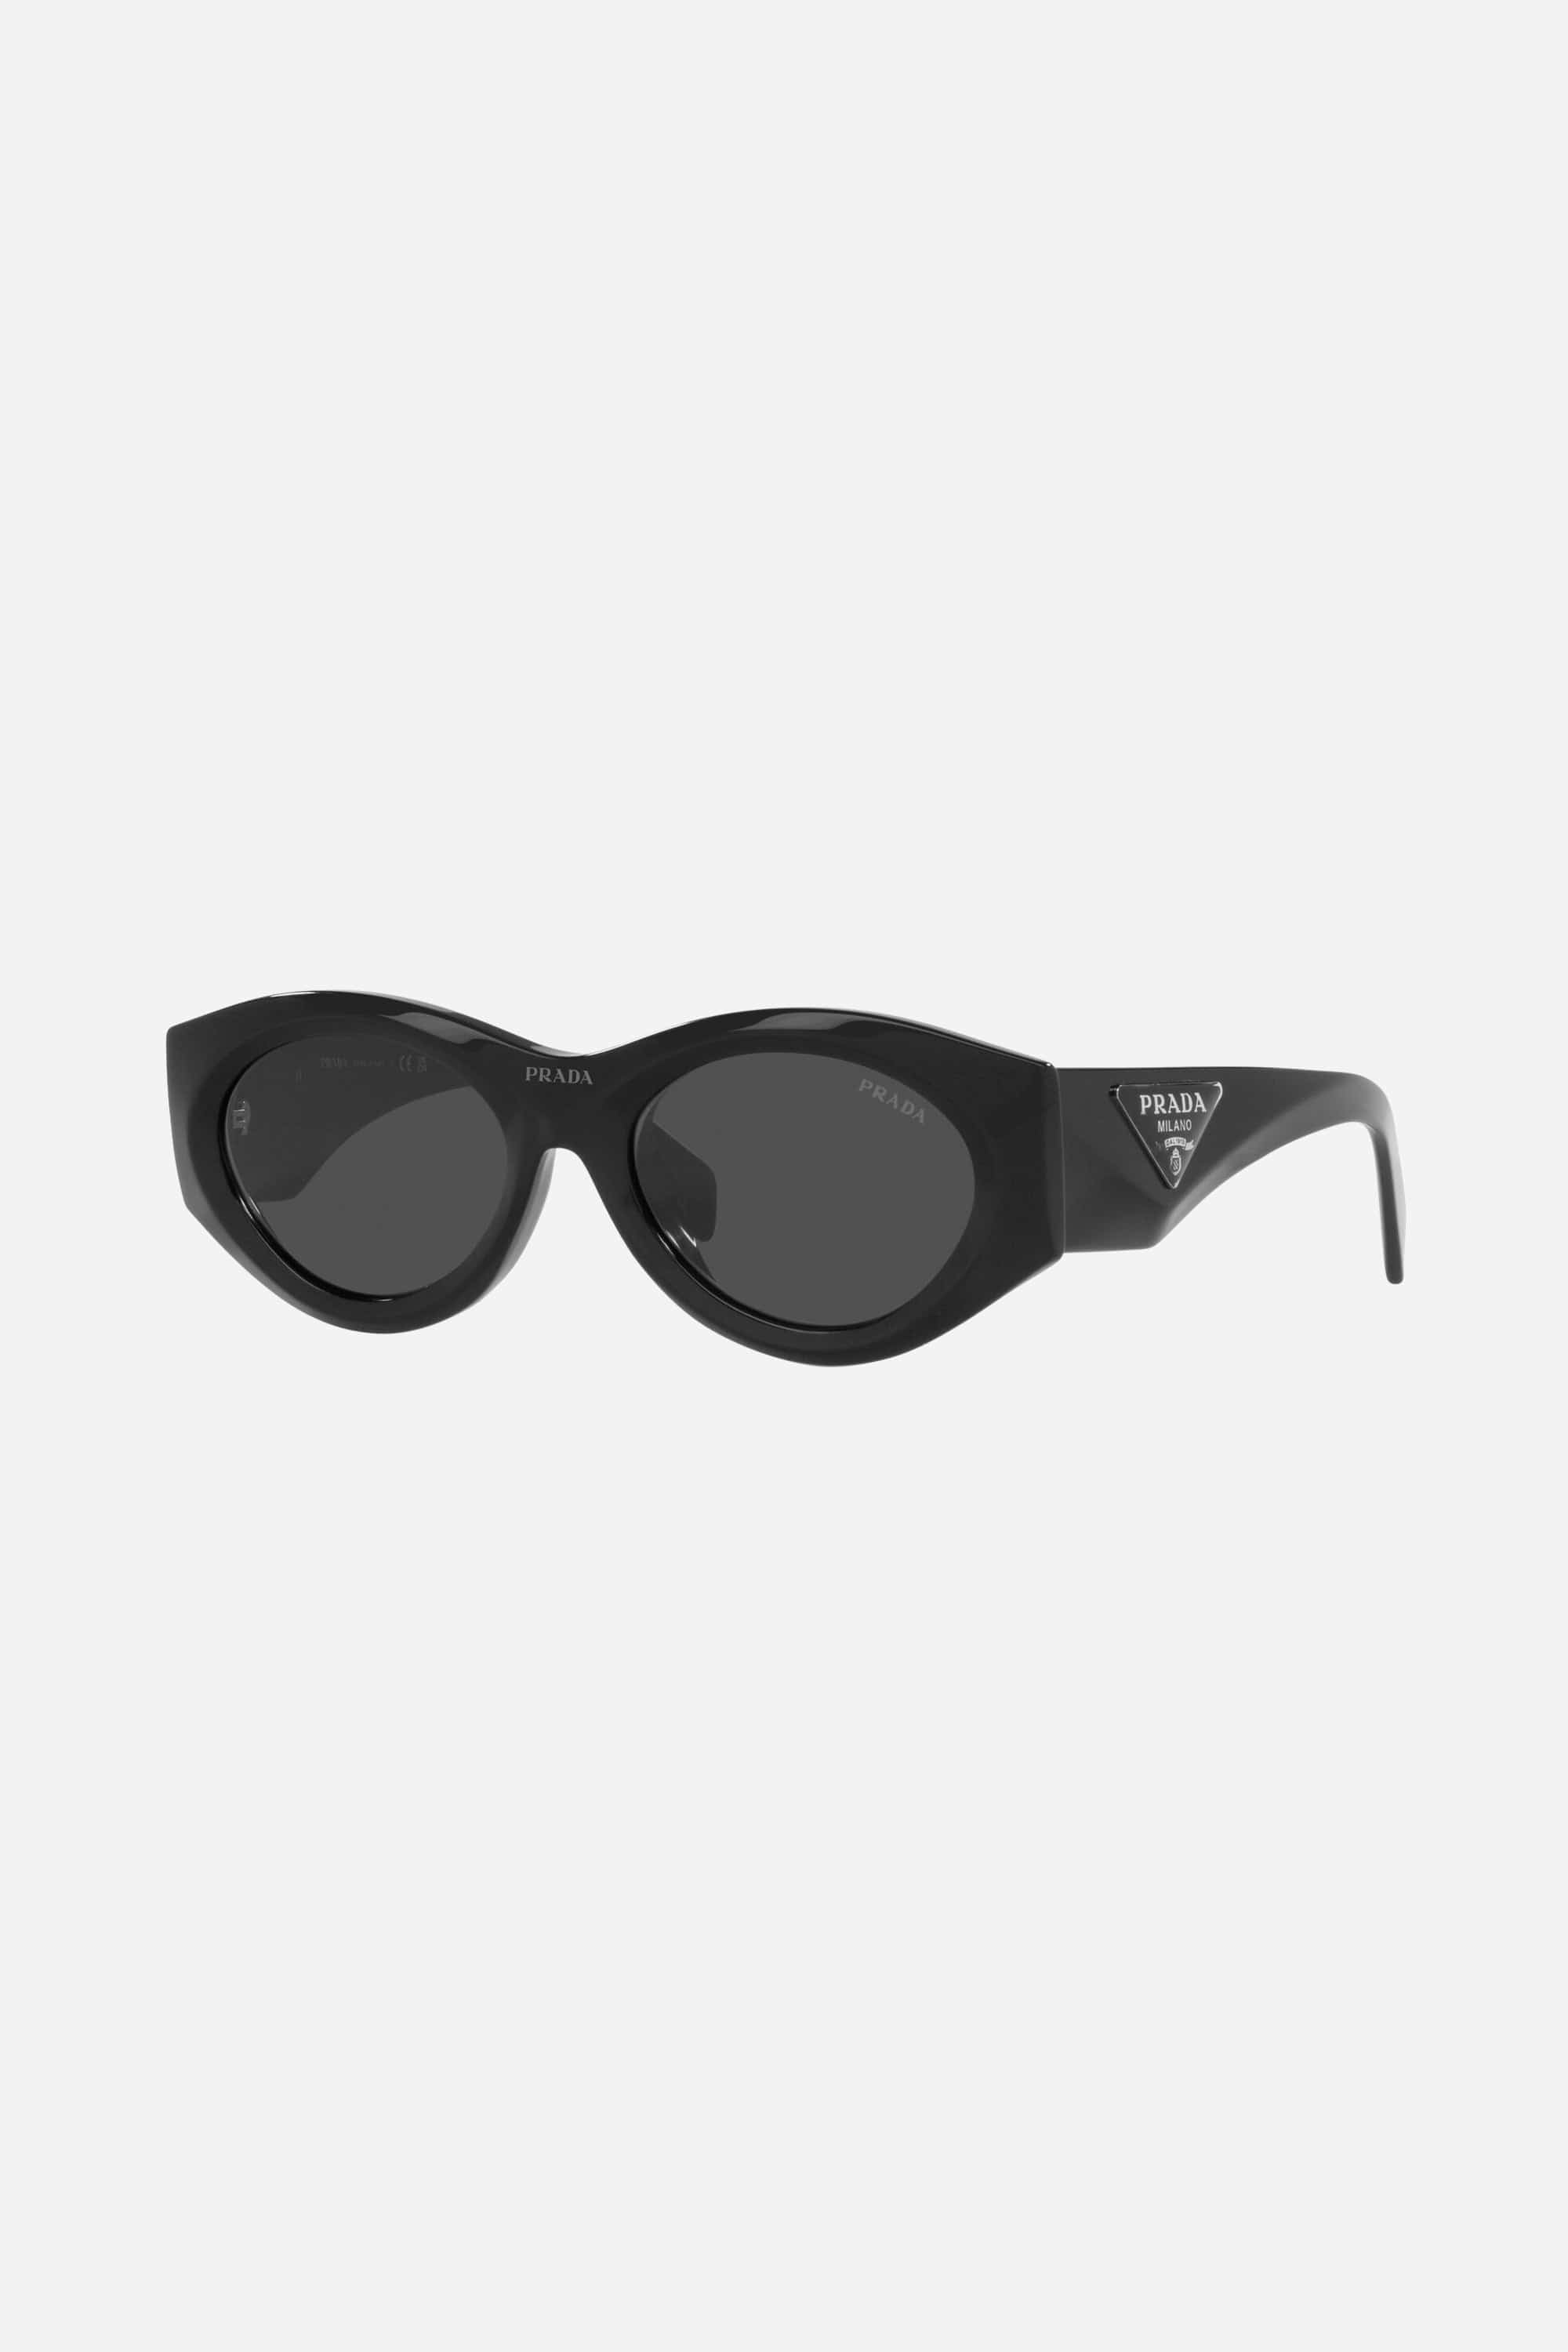 Prada PR20ZS black bold oval sunglasses - Eyewear Club